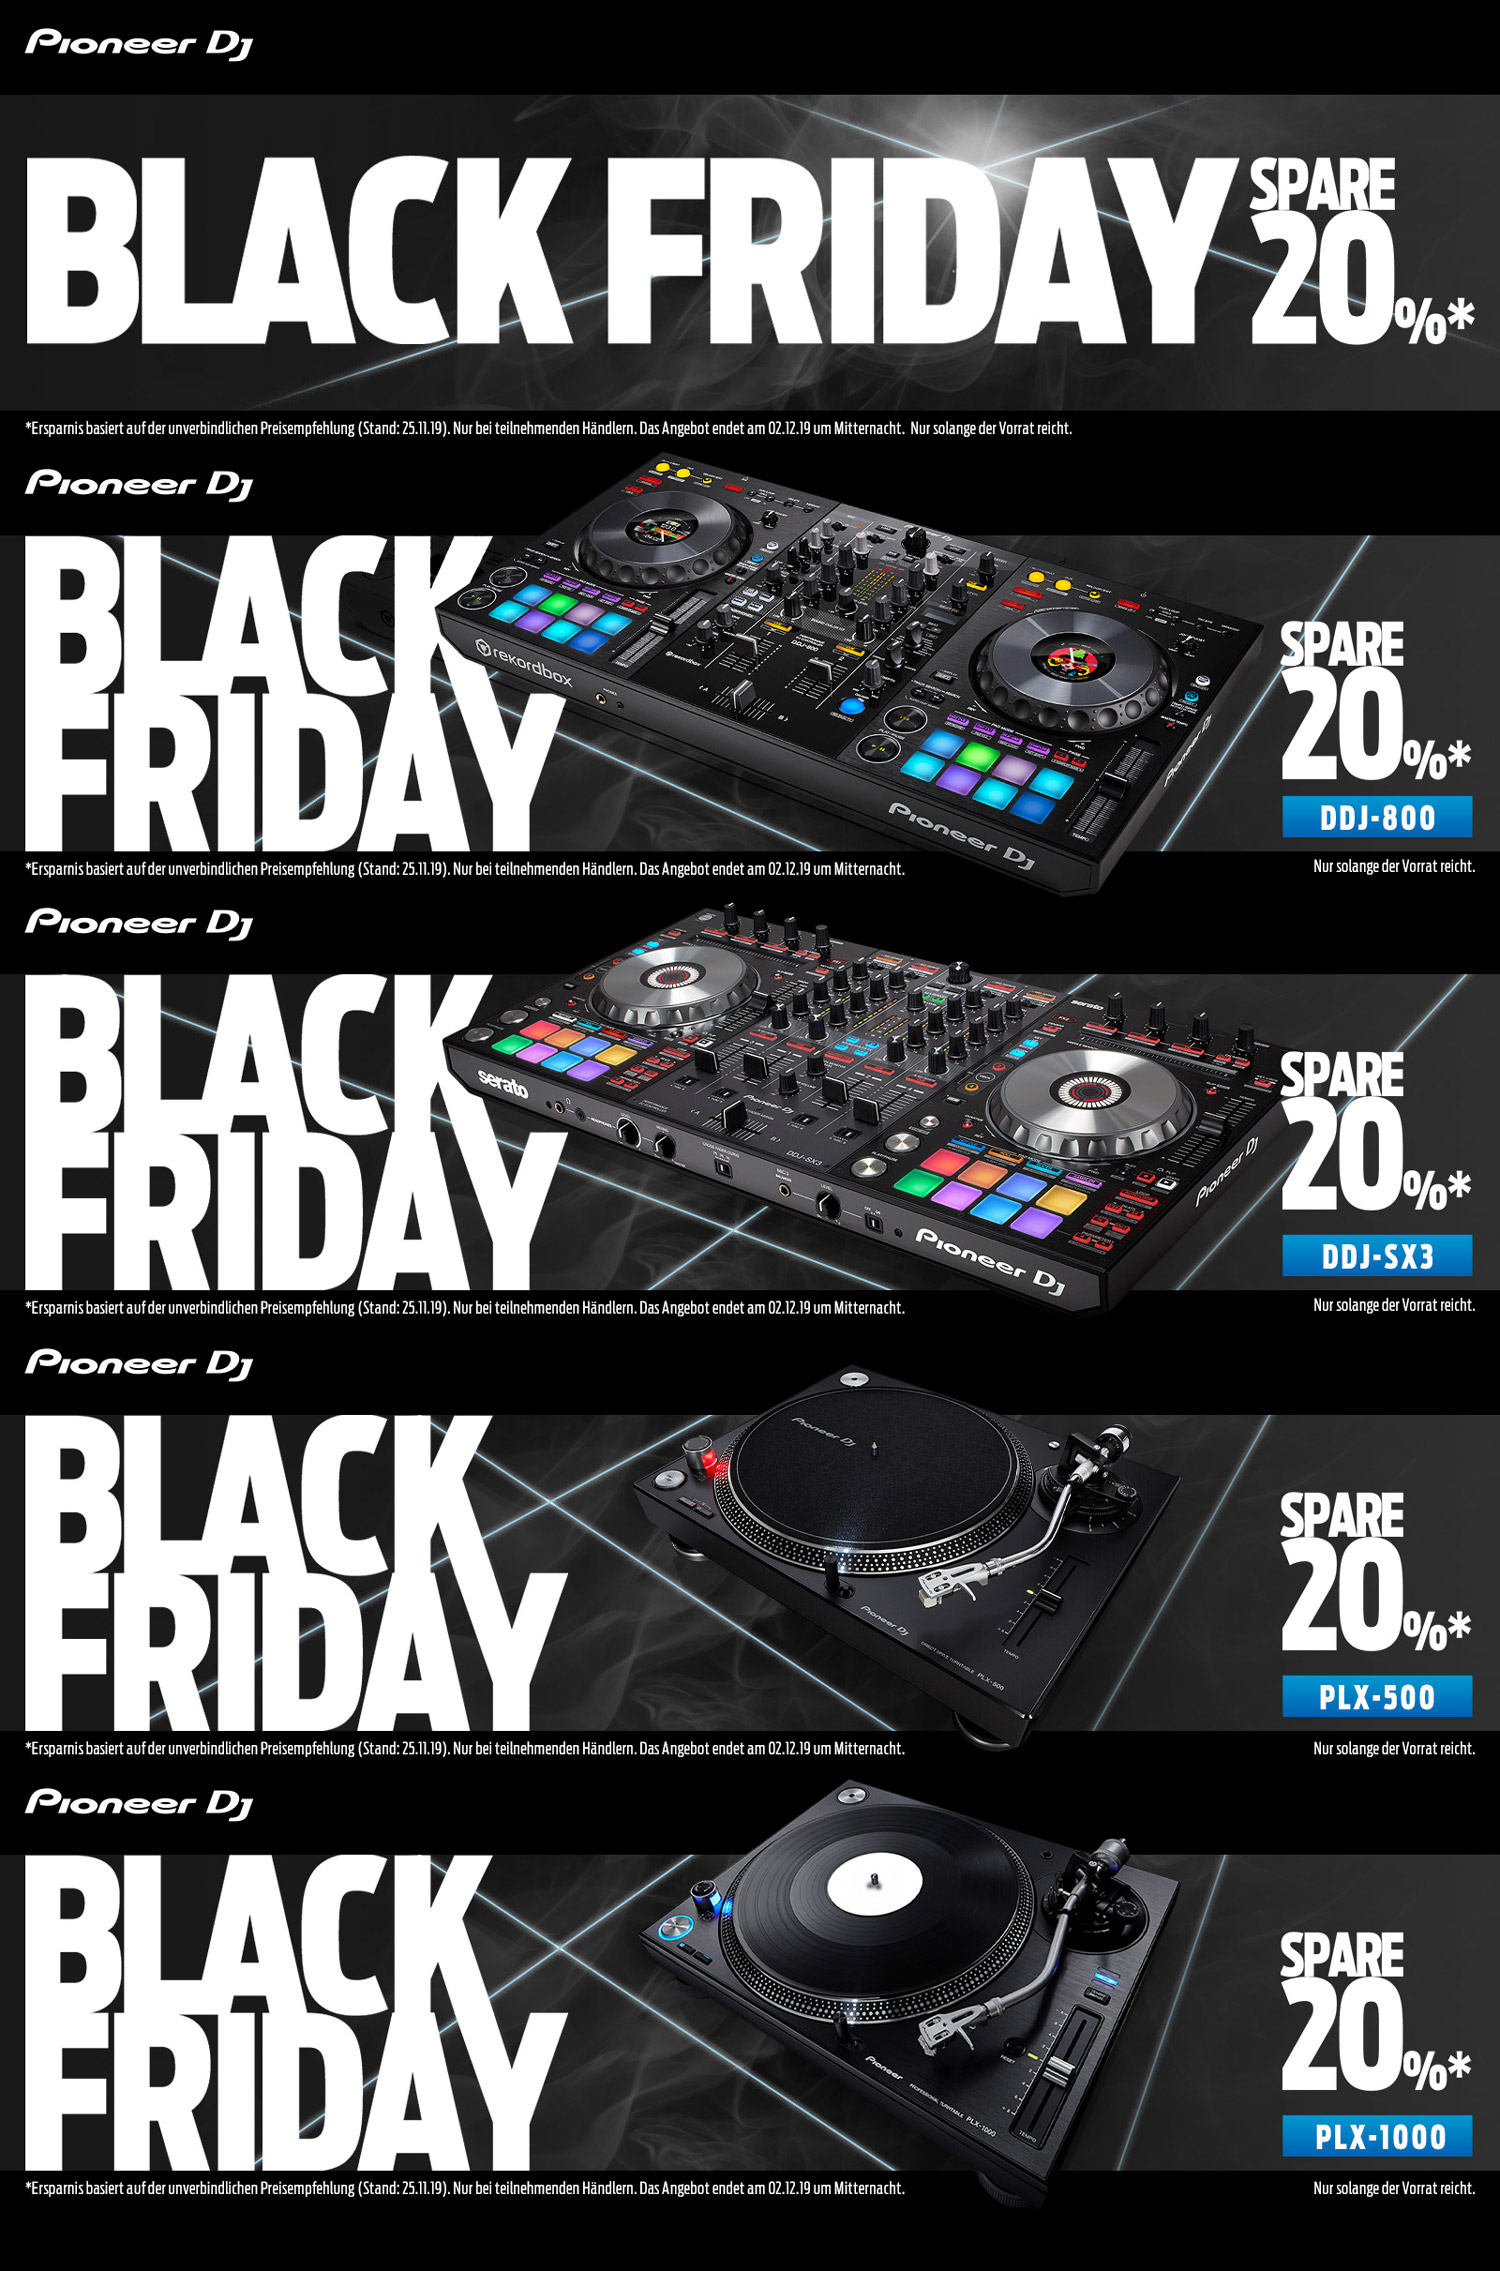 Pioneer DJ - Black Friday Deals - 20% off